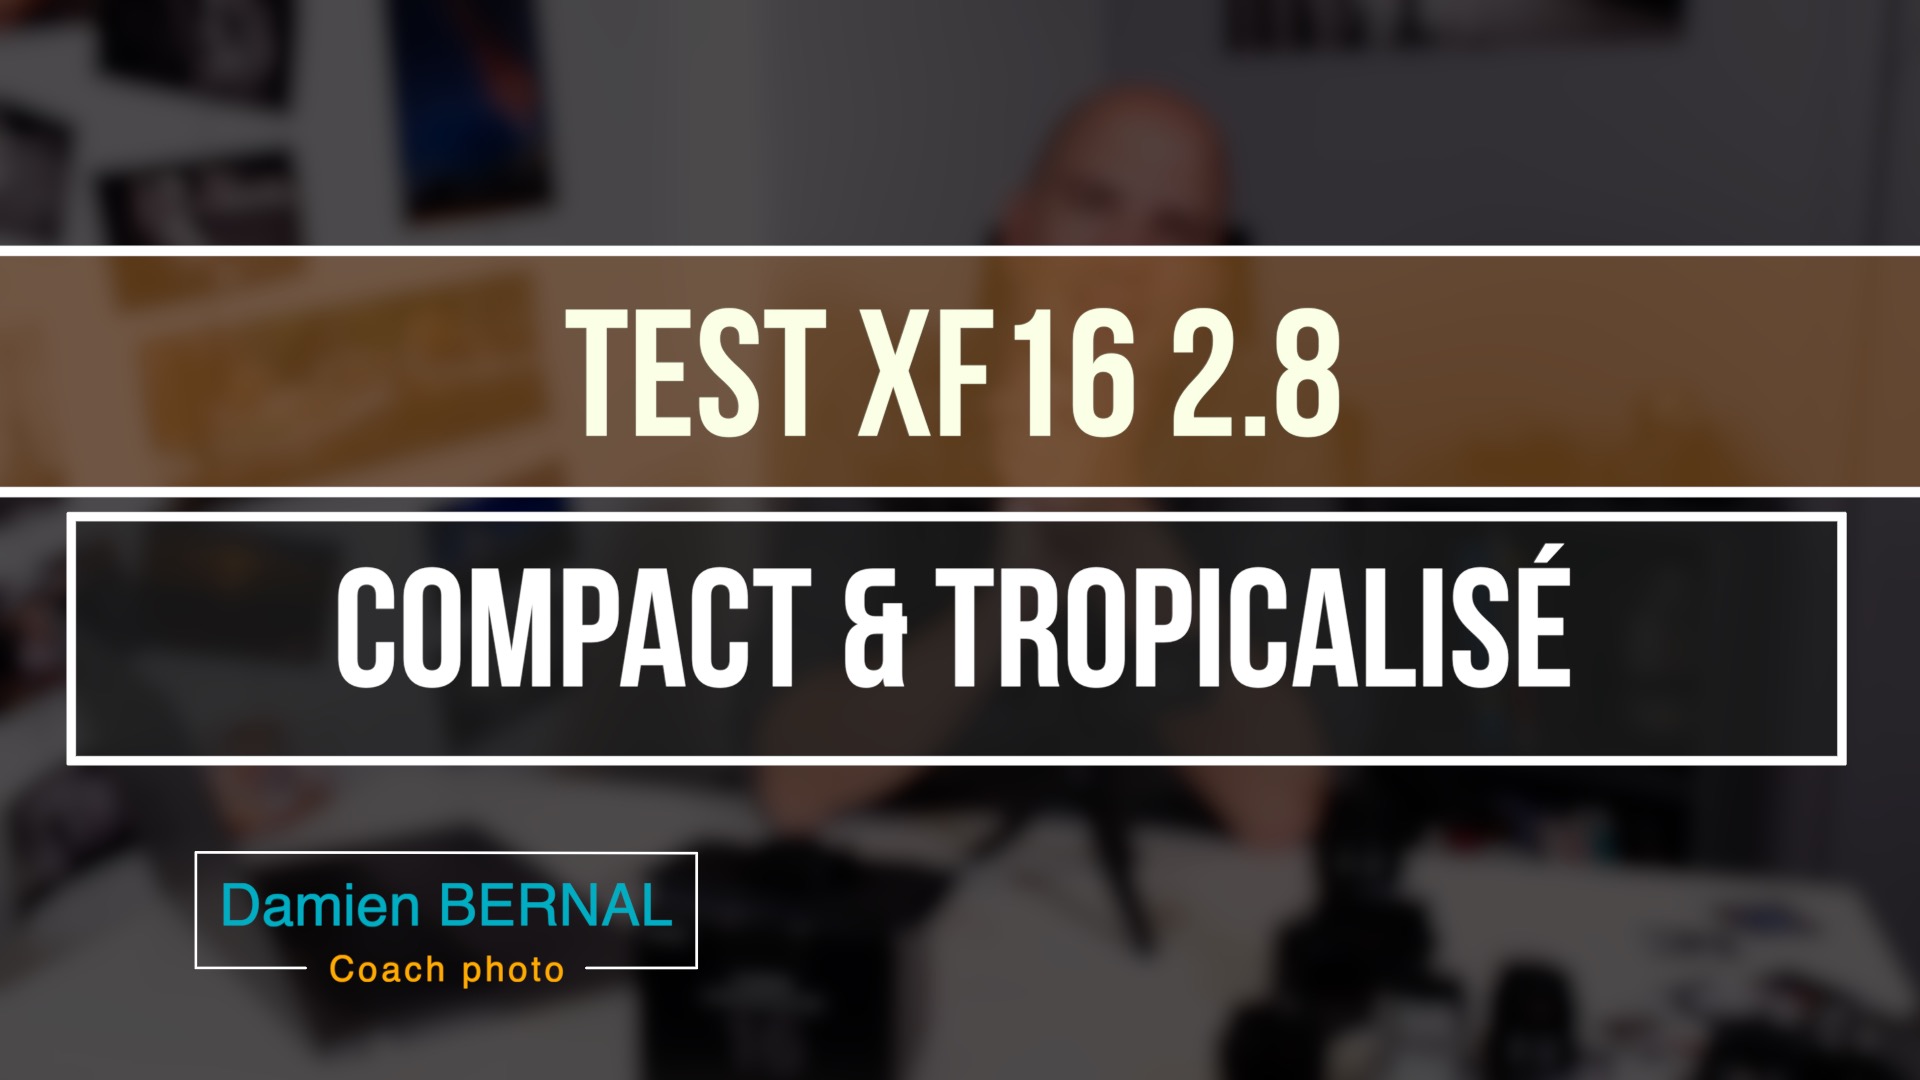 Test XF16 2.8